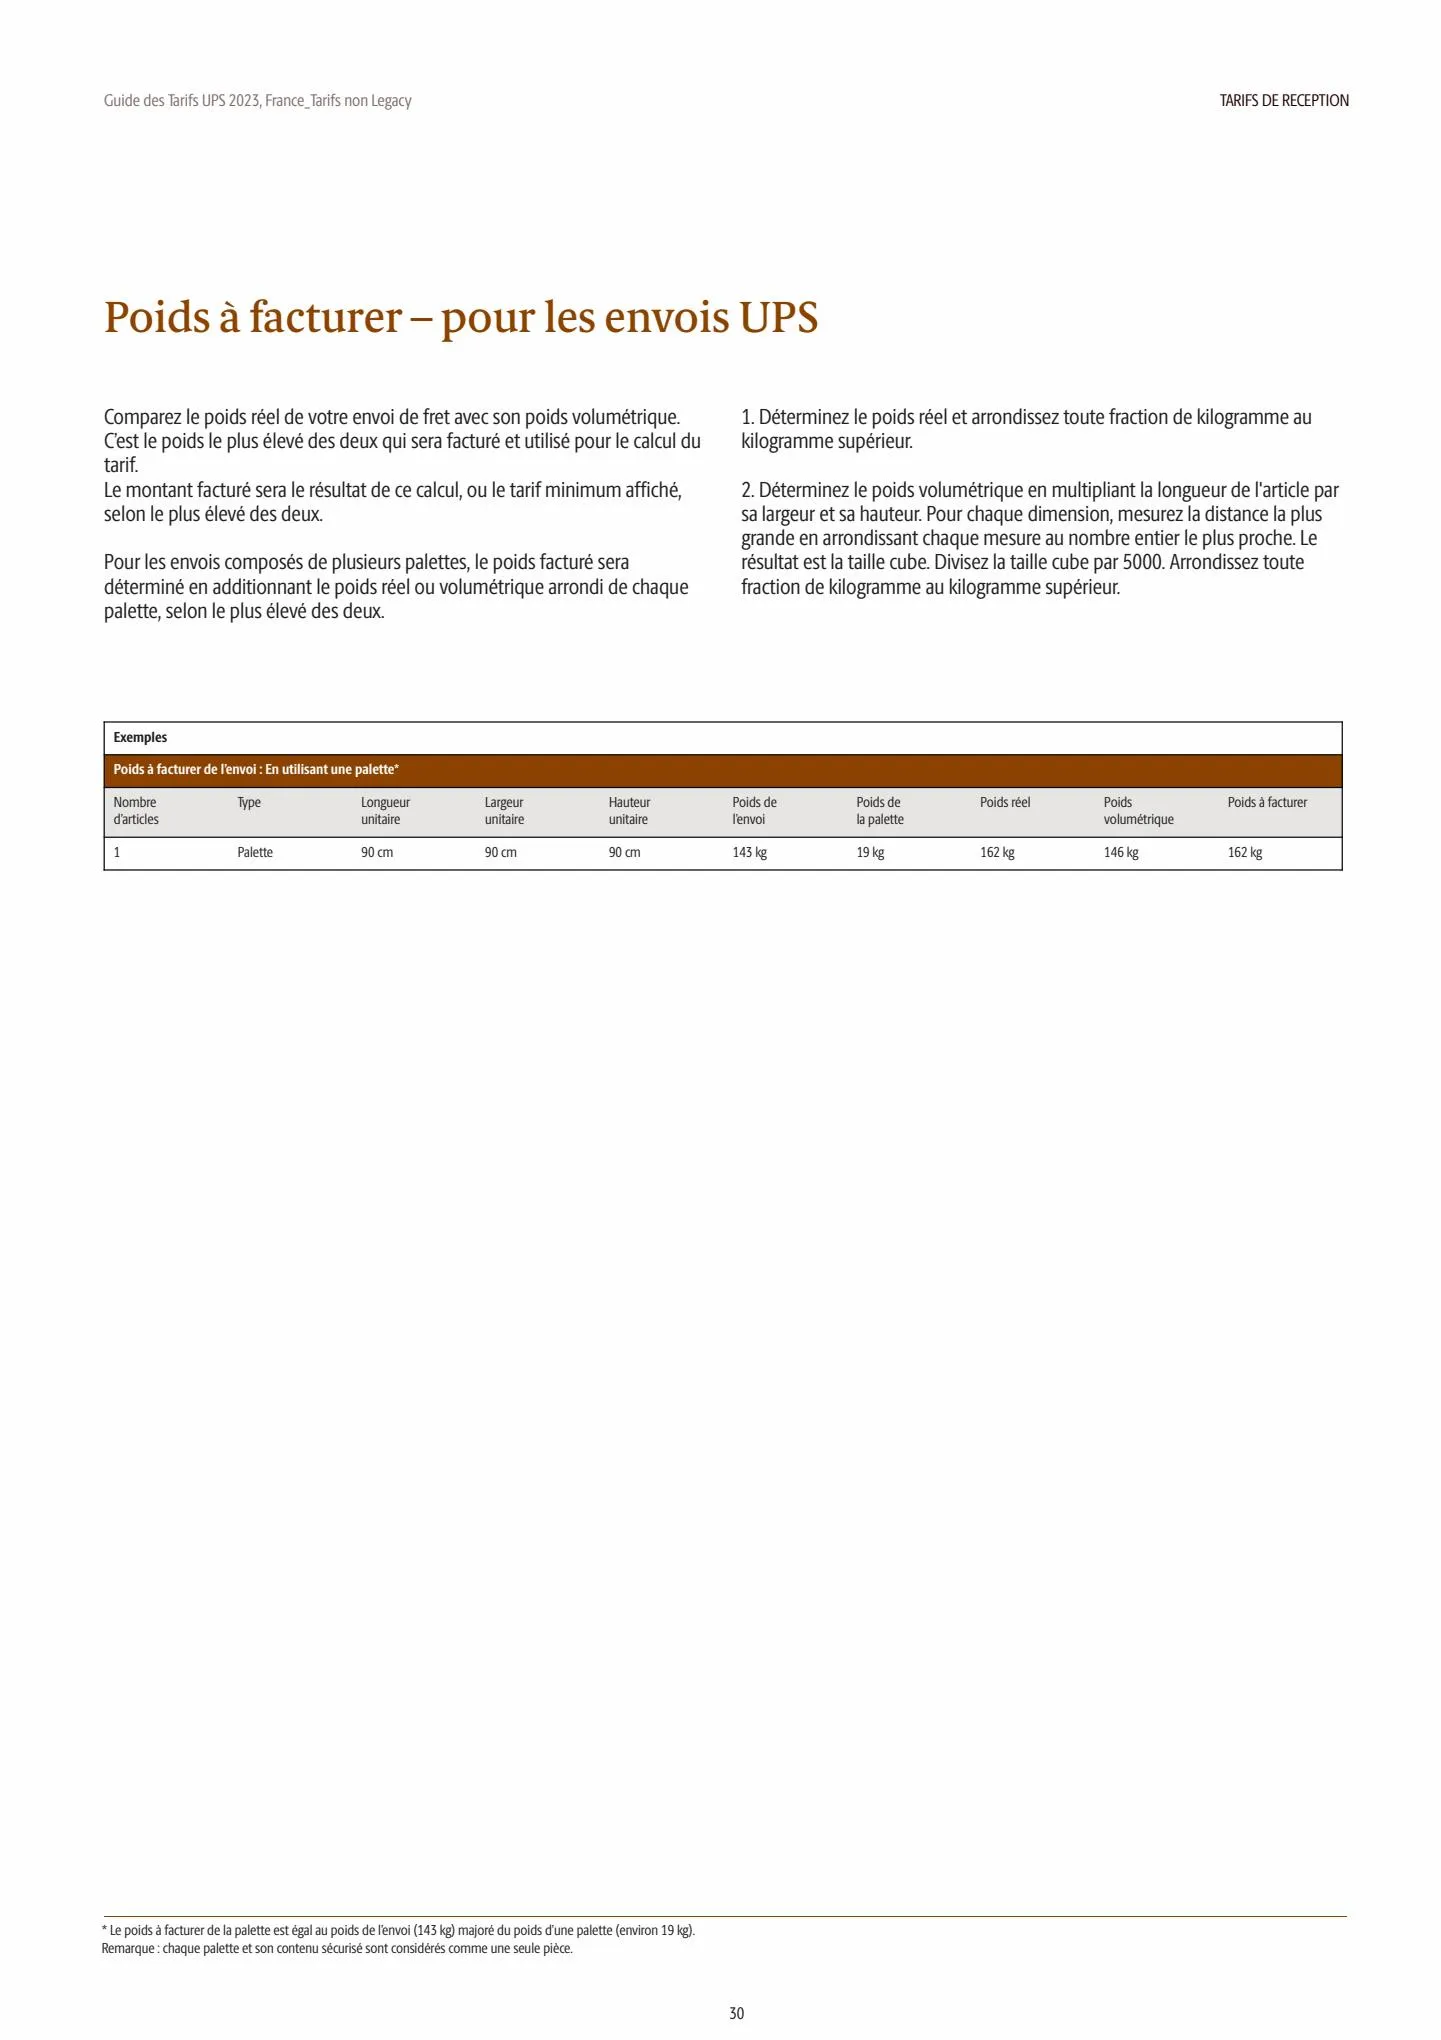 Catalogue France tariff base 2023, page 00030